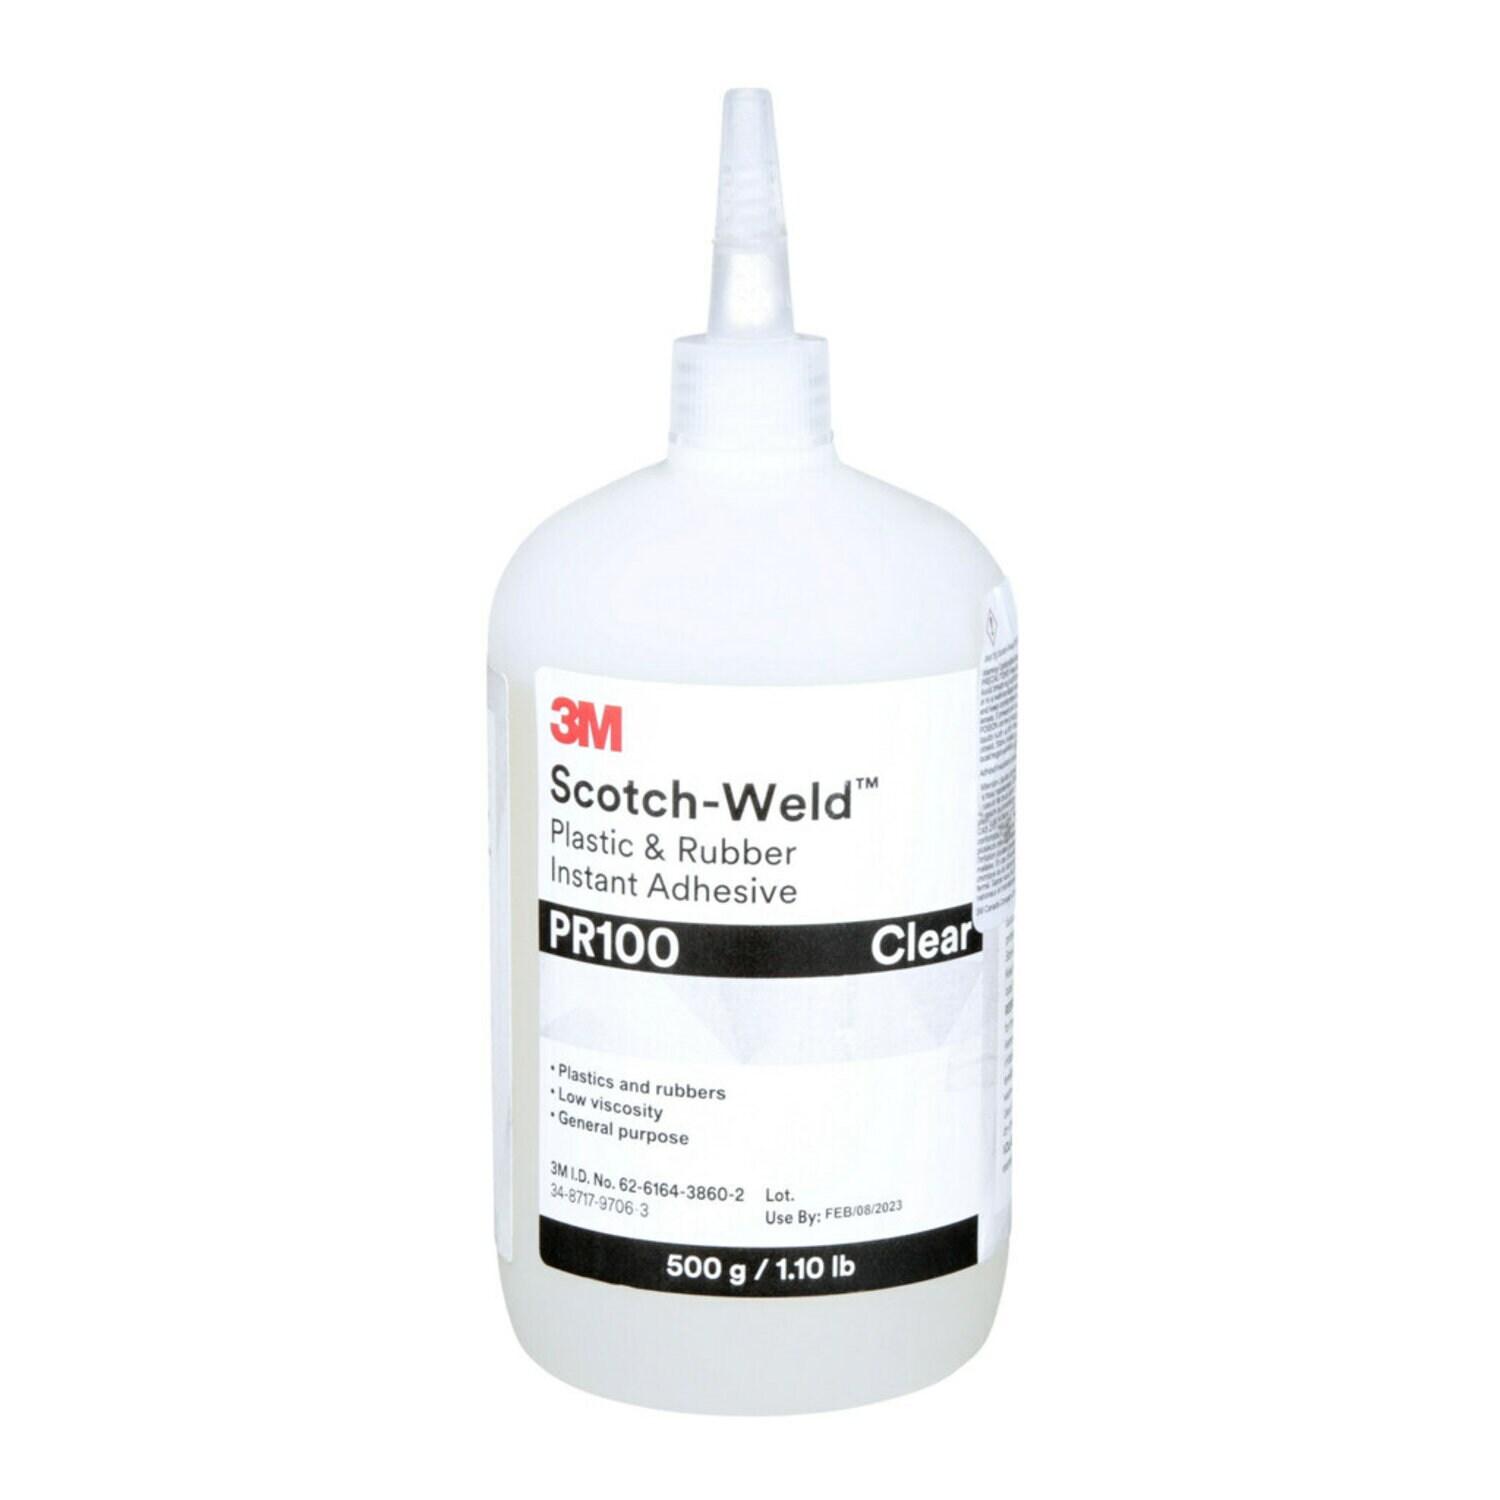 7100039200 - 3M Scotch-Weld Plastic & Rubber Instant Adhesive PR100, Clear, 500
Gram, 1 Bottle/Case